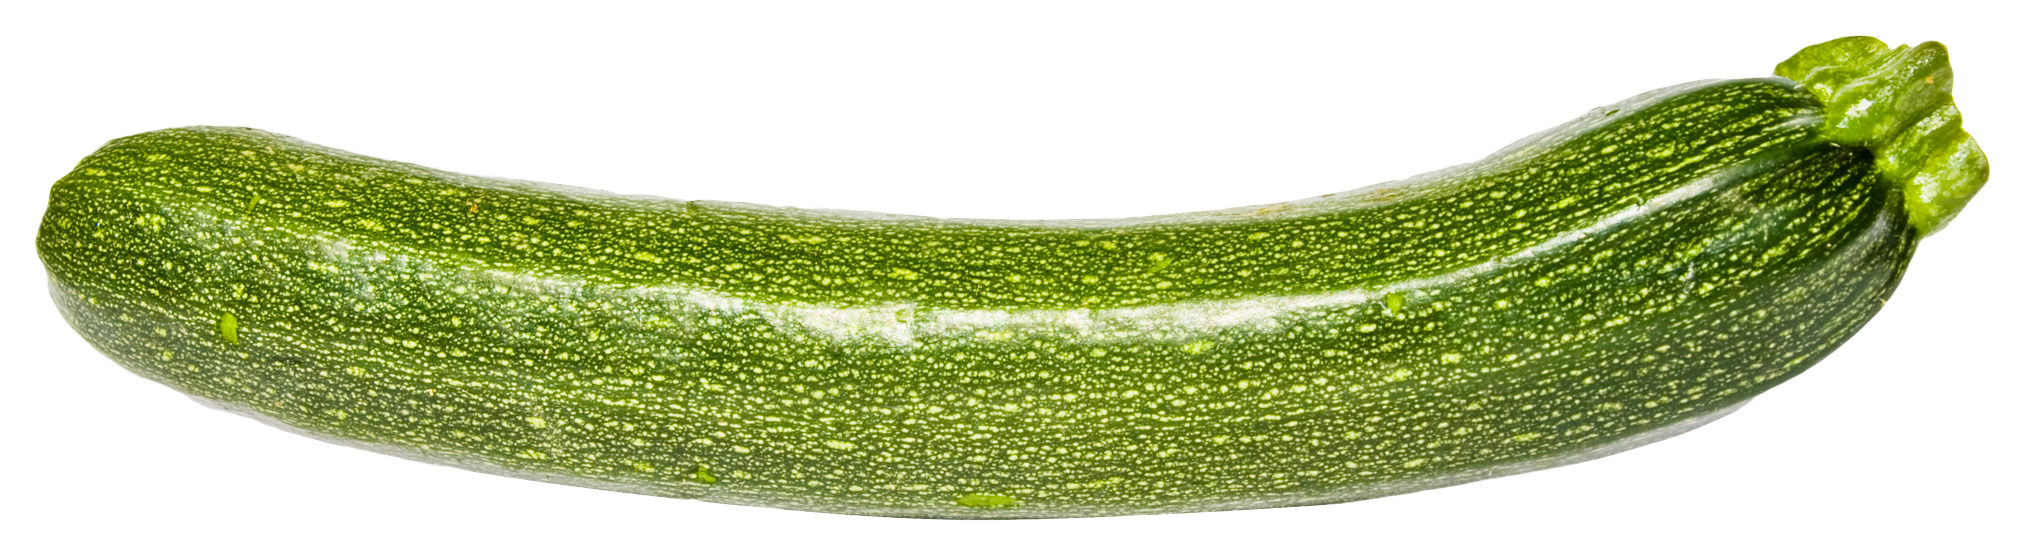 Zucchini Summer Squash PNG Clipart